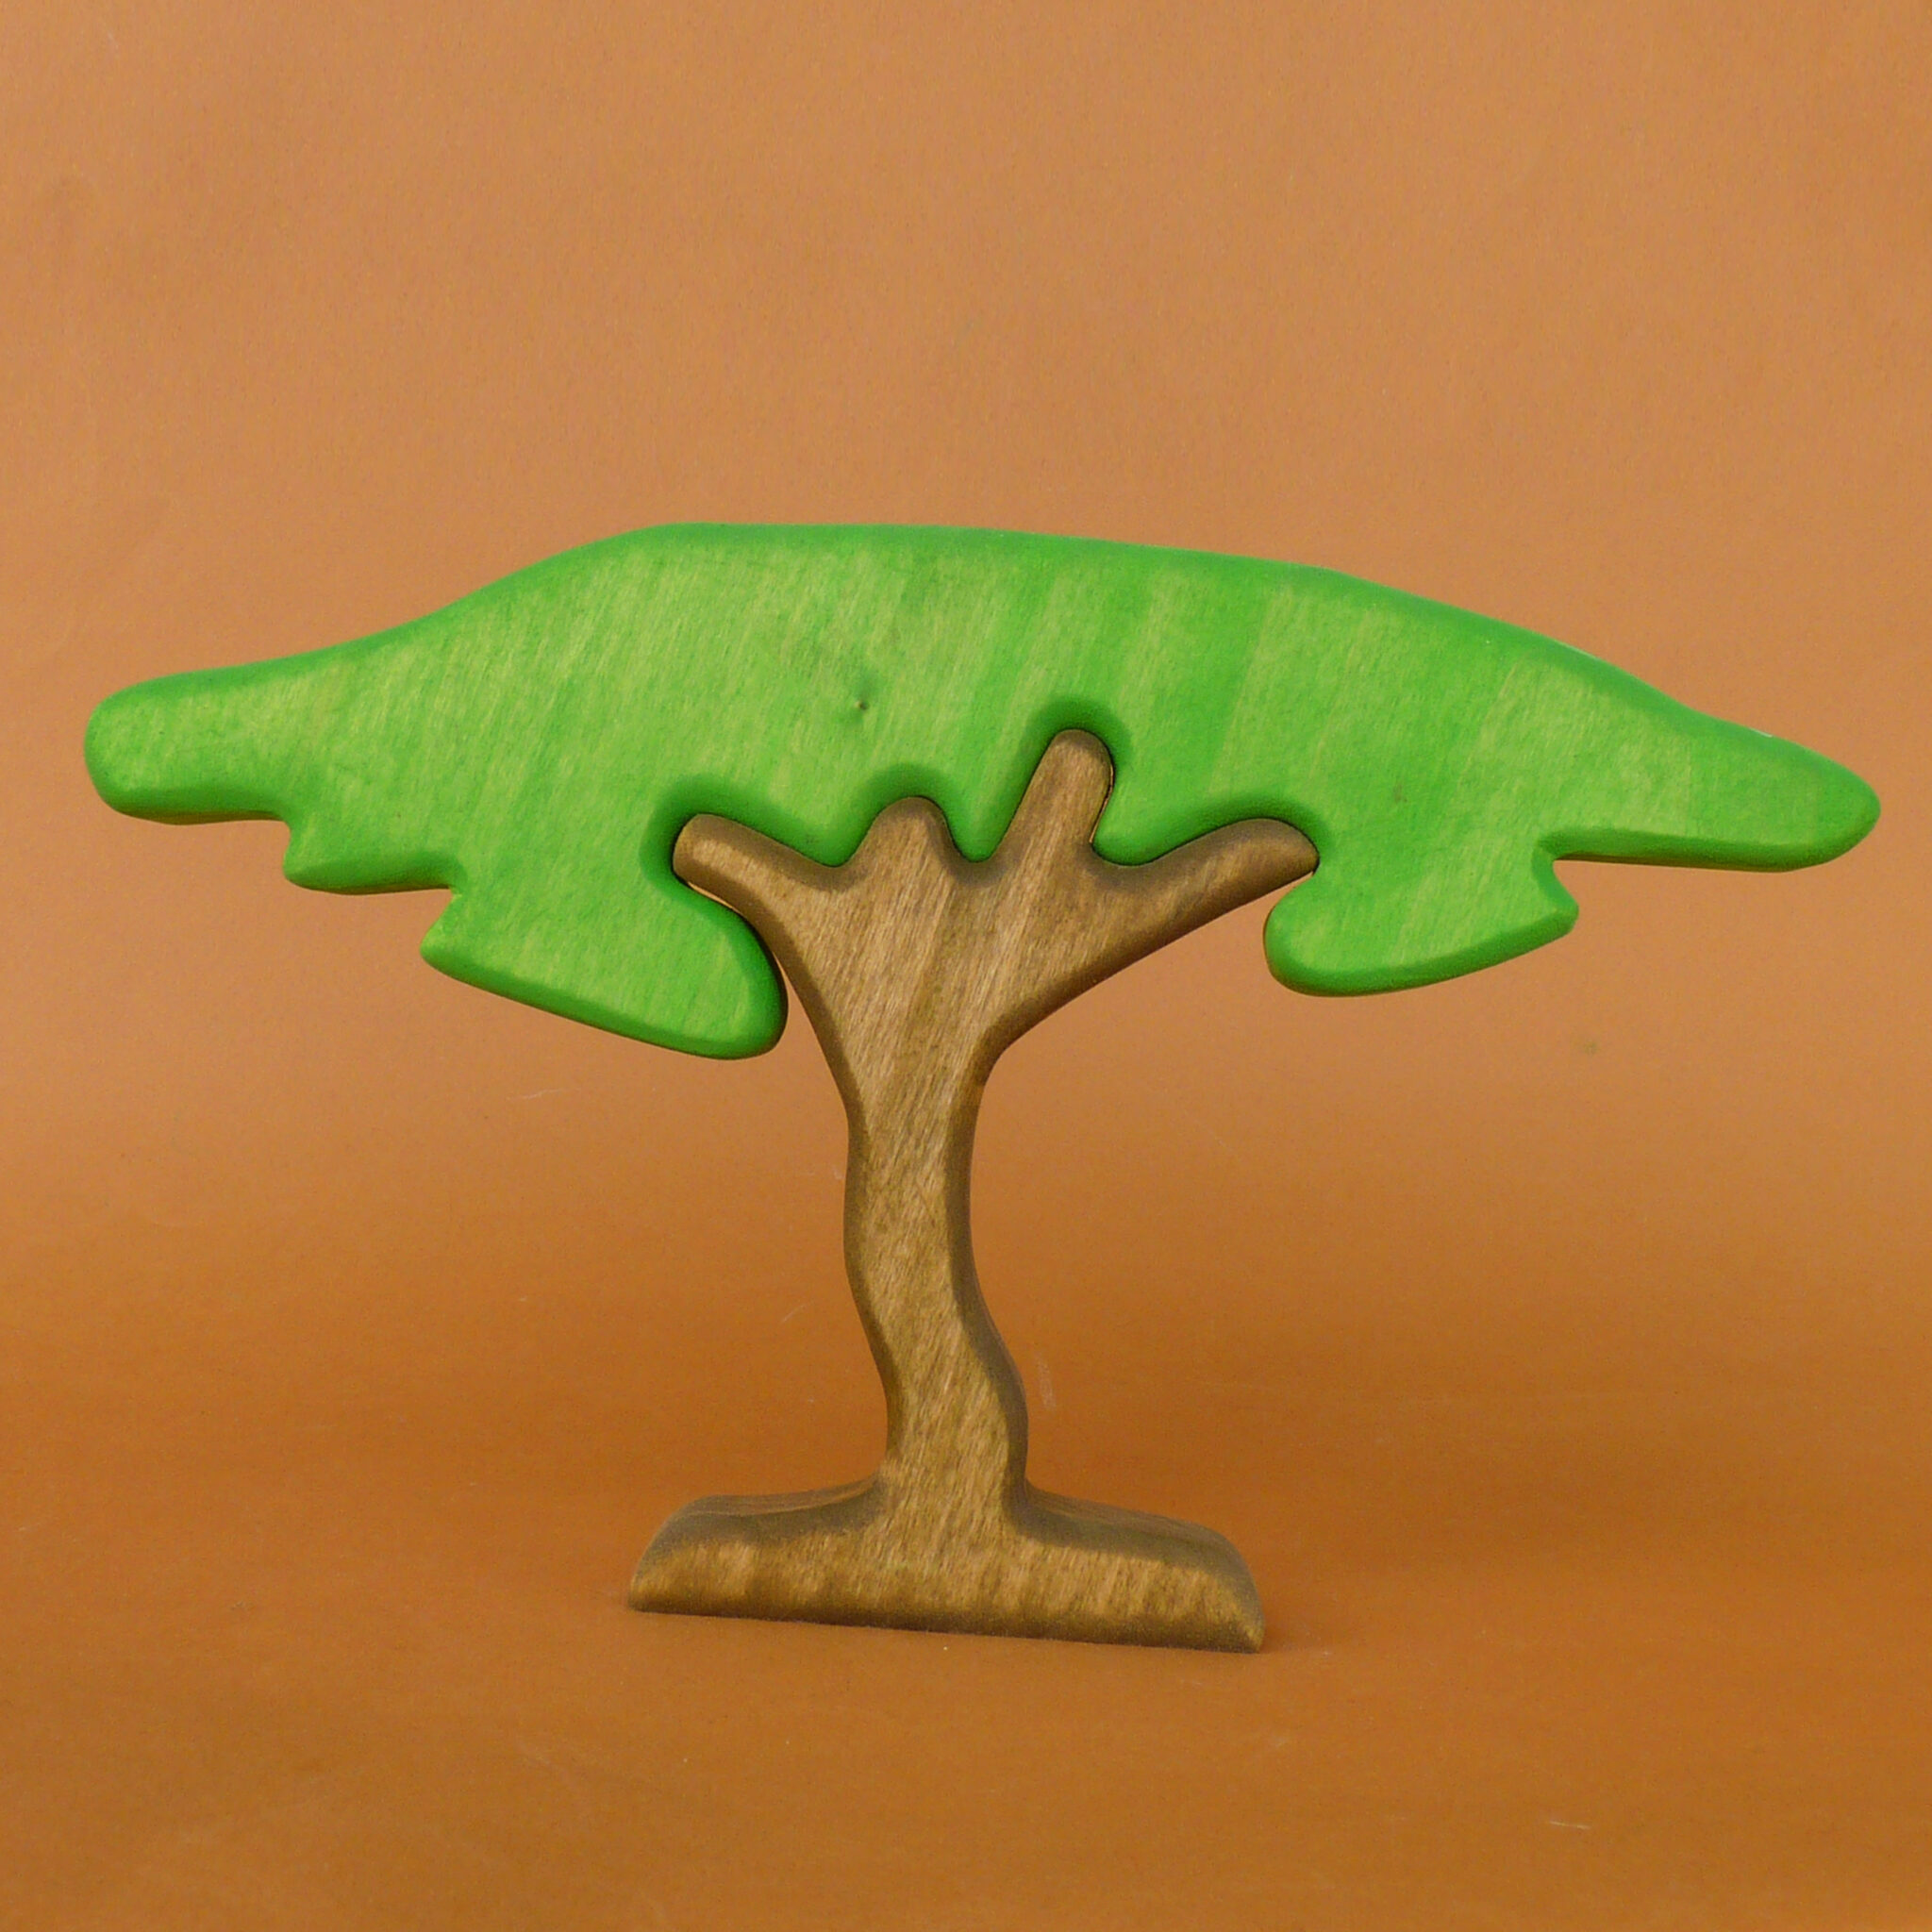 Toy tree. Дерево игрушка. Деревянное дерево игрушка. Дерево зеленый игрушка. Деревья игрушки маленькие.